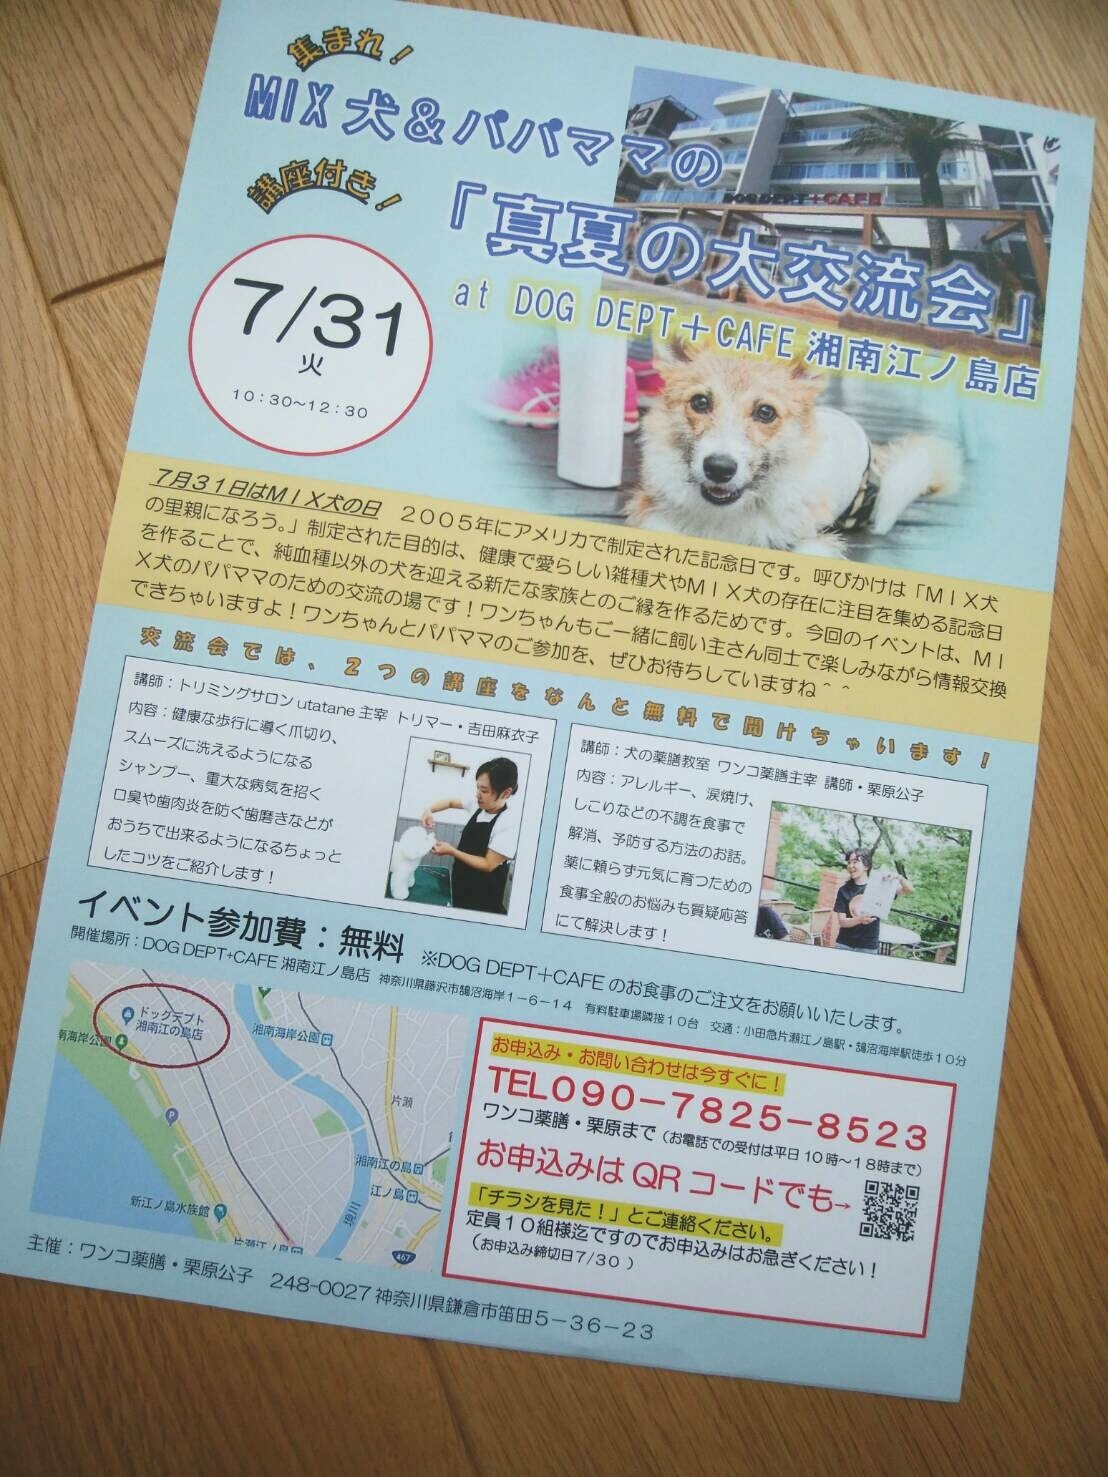 Dog Deptカフェ江ノ島店で開催のイベントのお知らせ 鎌倉の小さなトリミングルーム Utatane